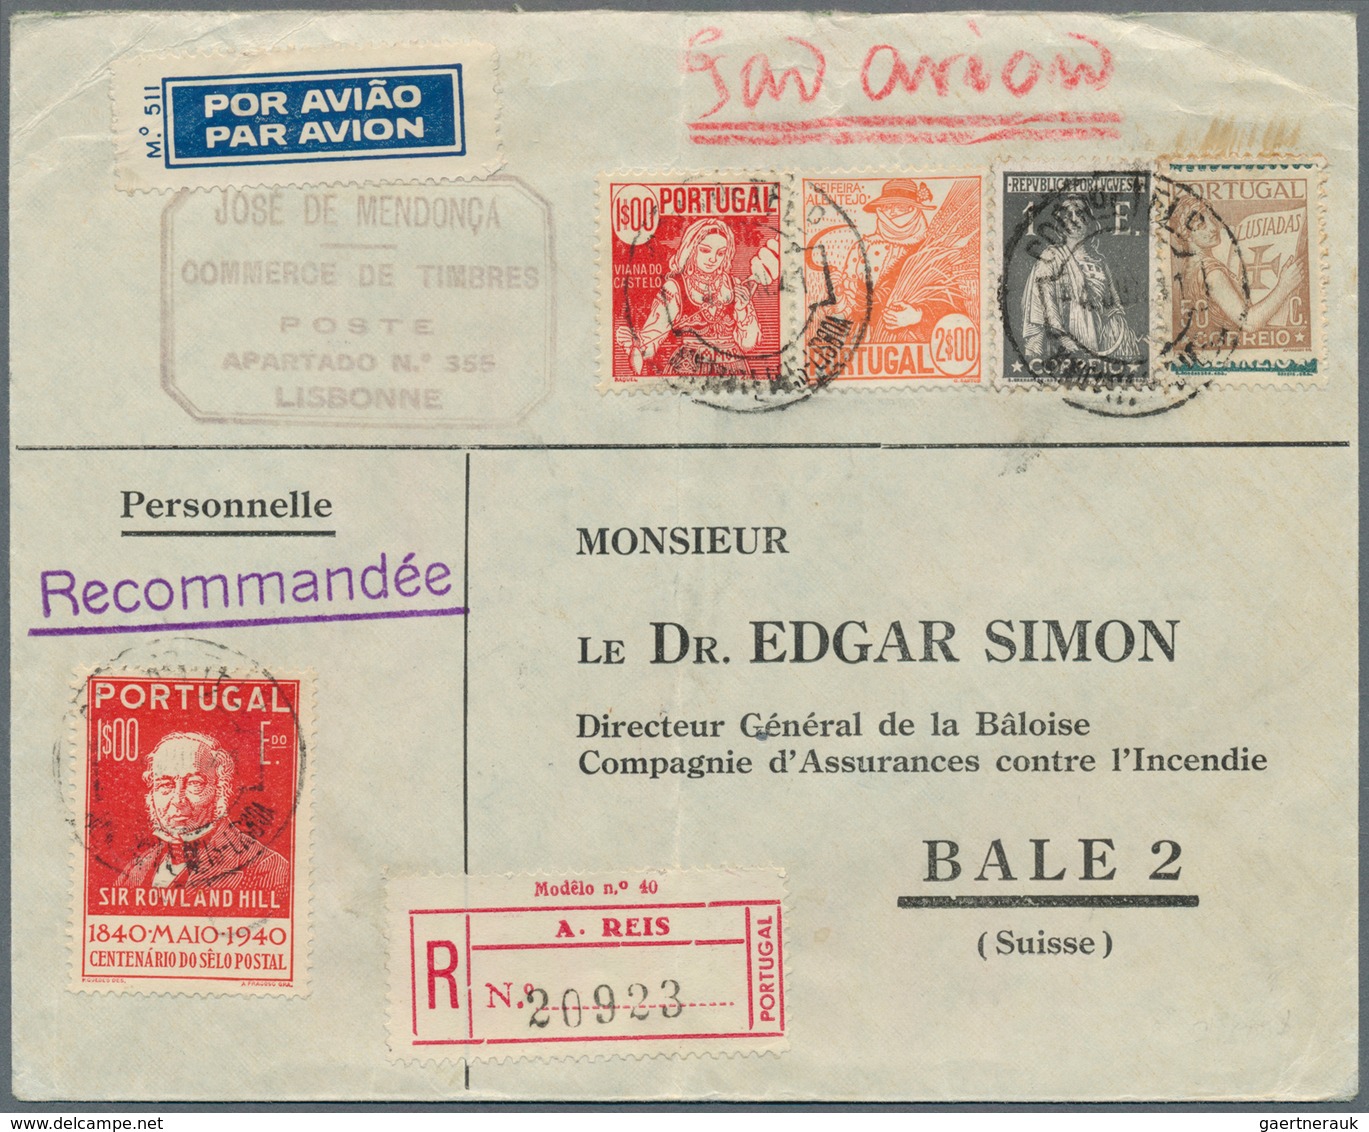 24774 Portugiesische Kolonien: 1906/1964, Portugal/colonies, group of 31 covers/cards, nice part colonies